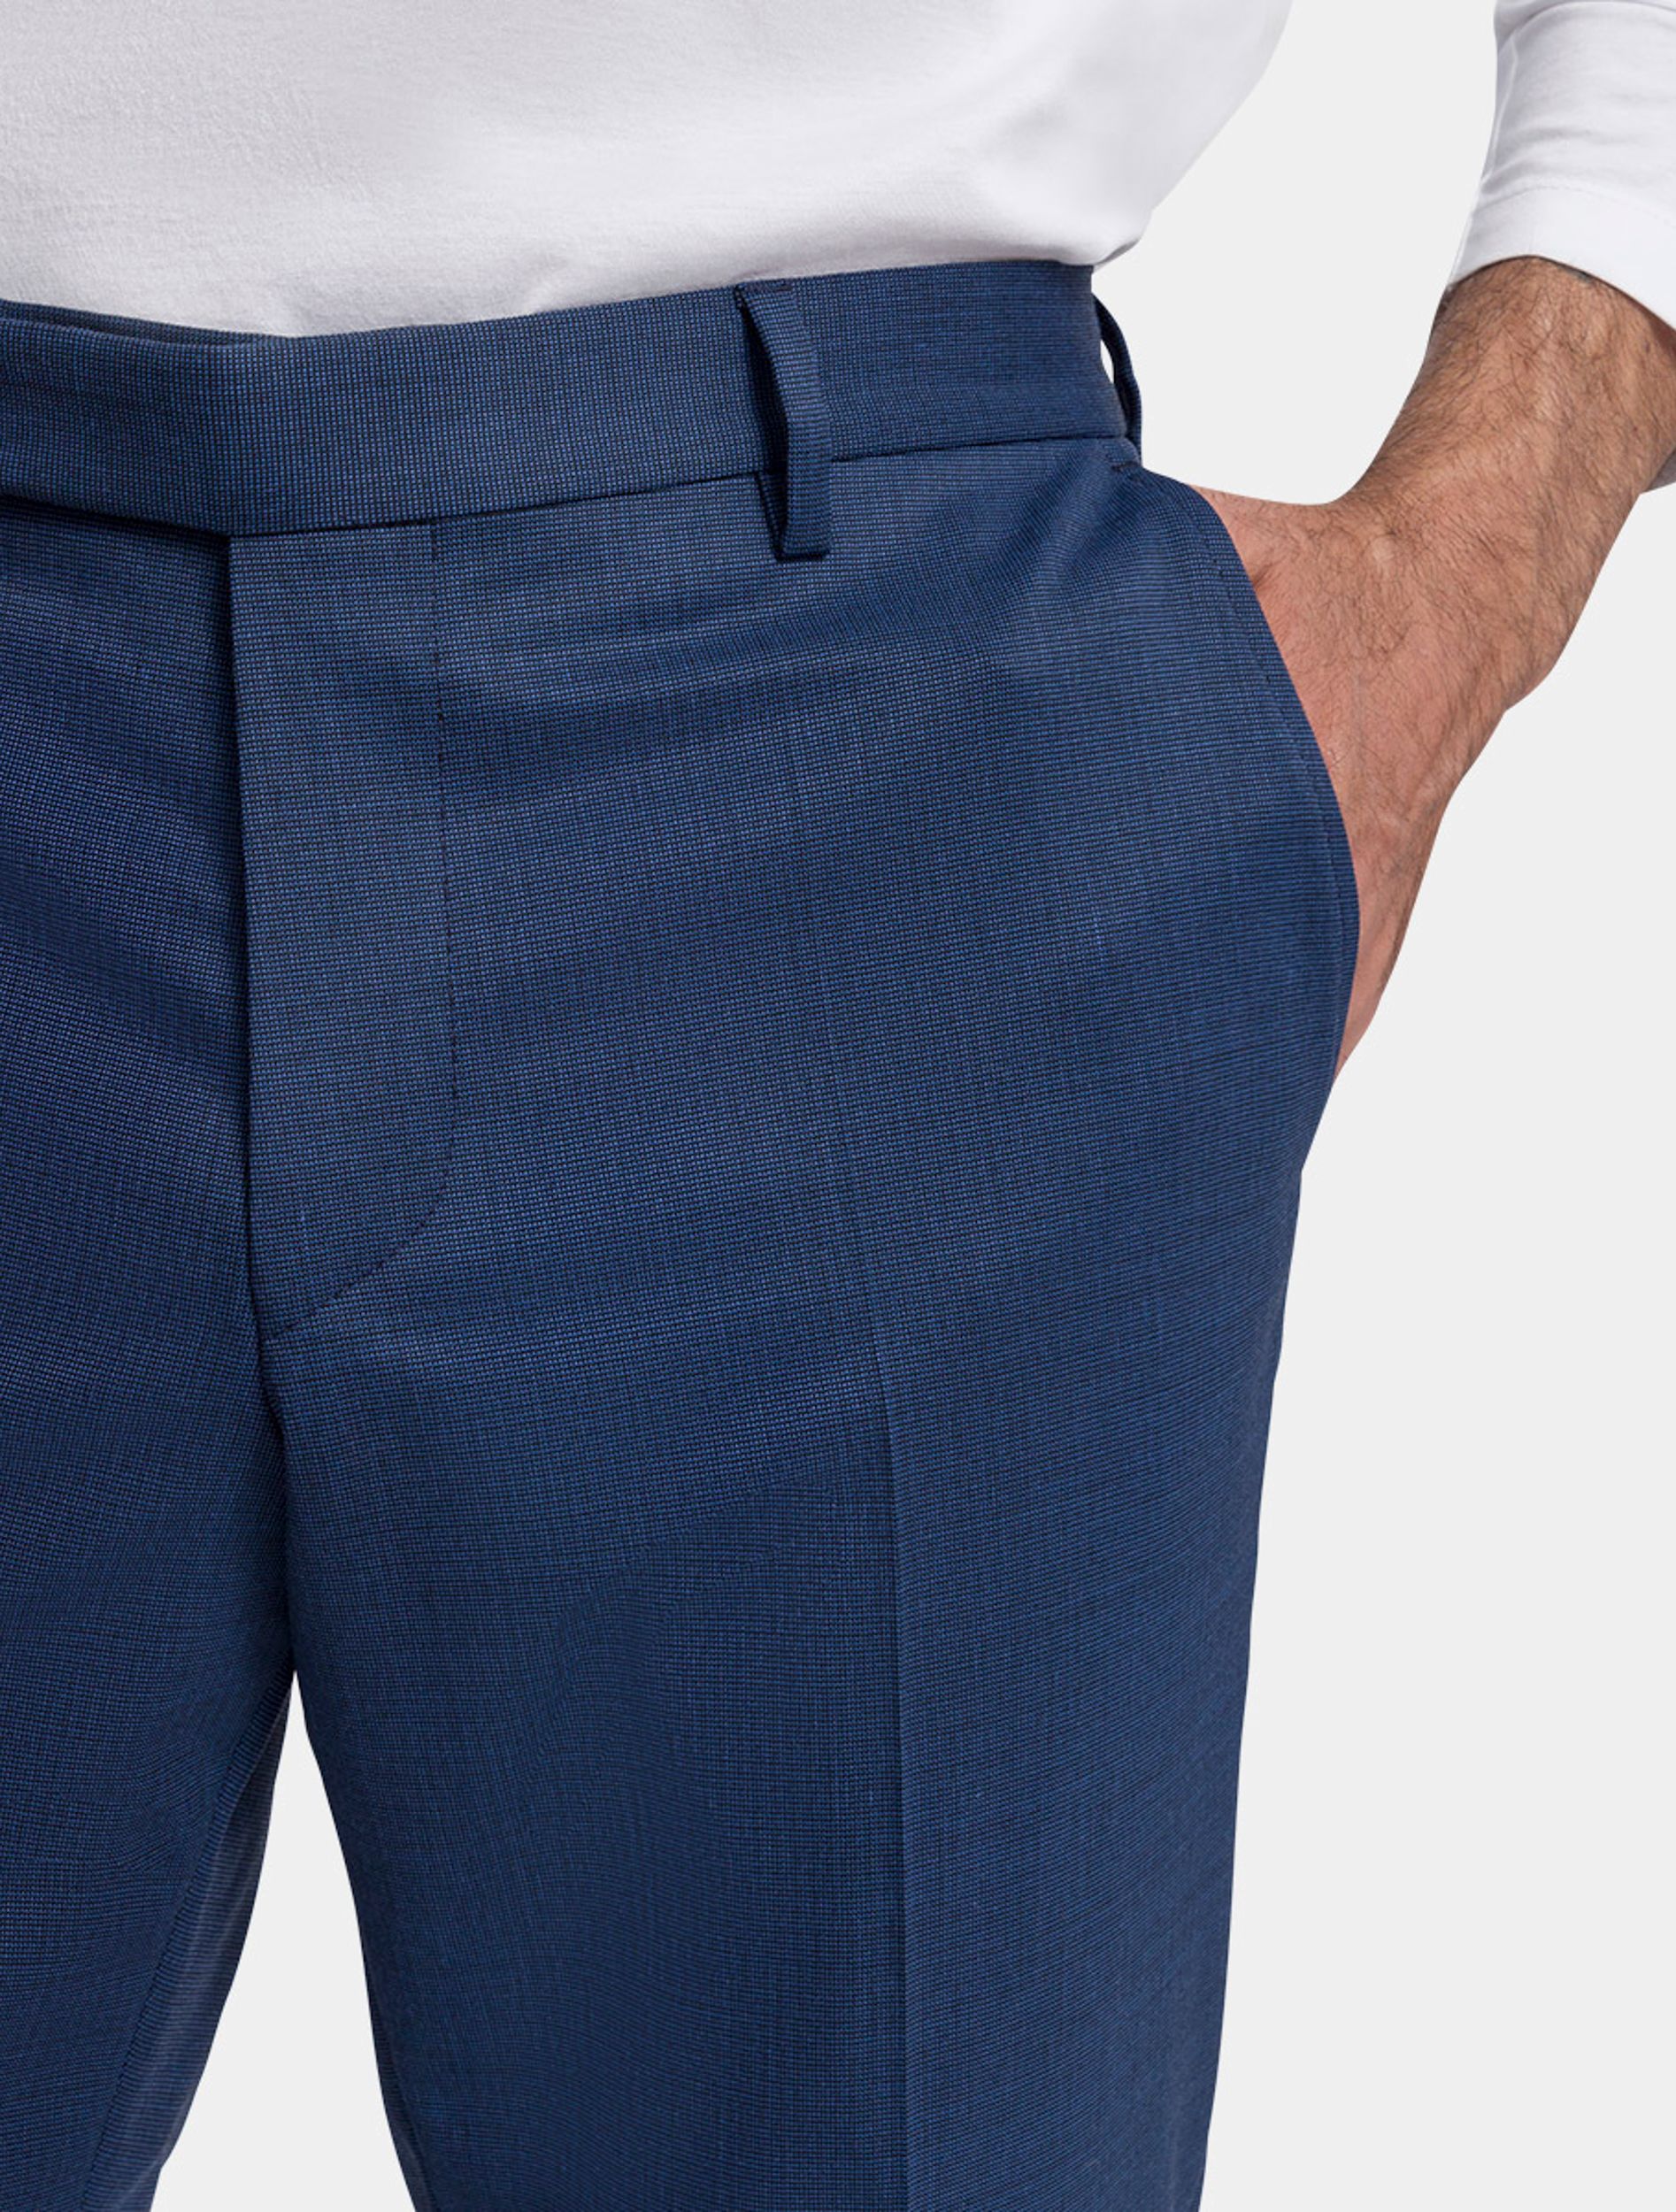 Pierre Cardin Mix & Match Pantalon Blauw 078679-001-102